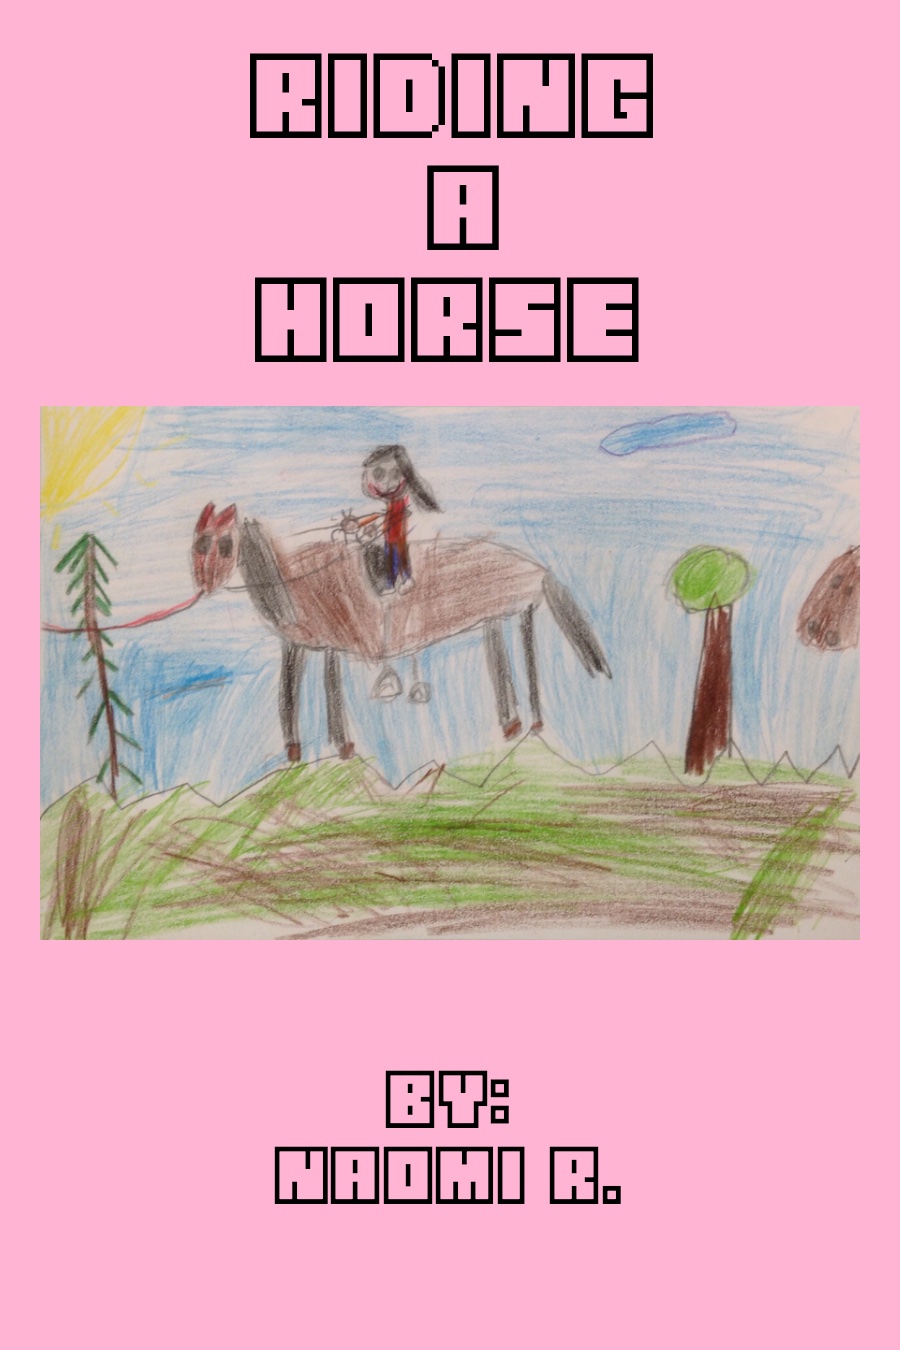 Riding a Horse by Naomi R